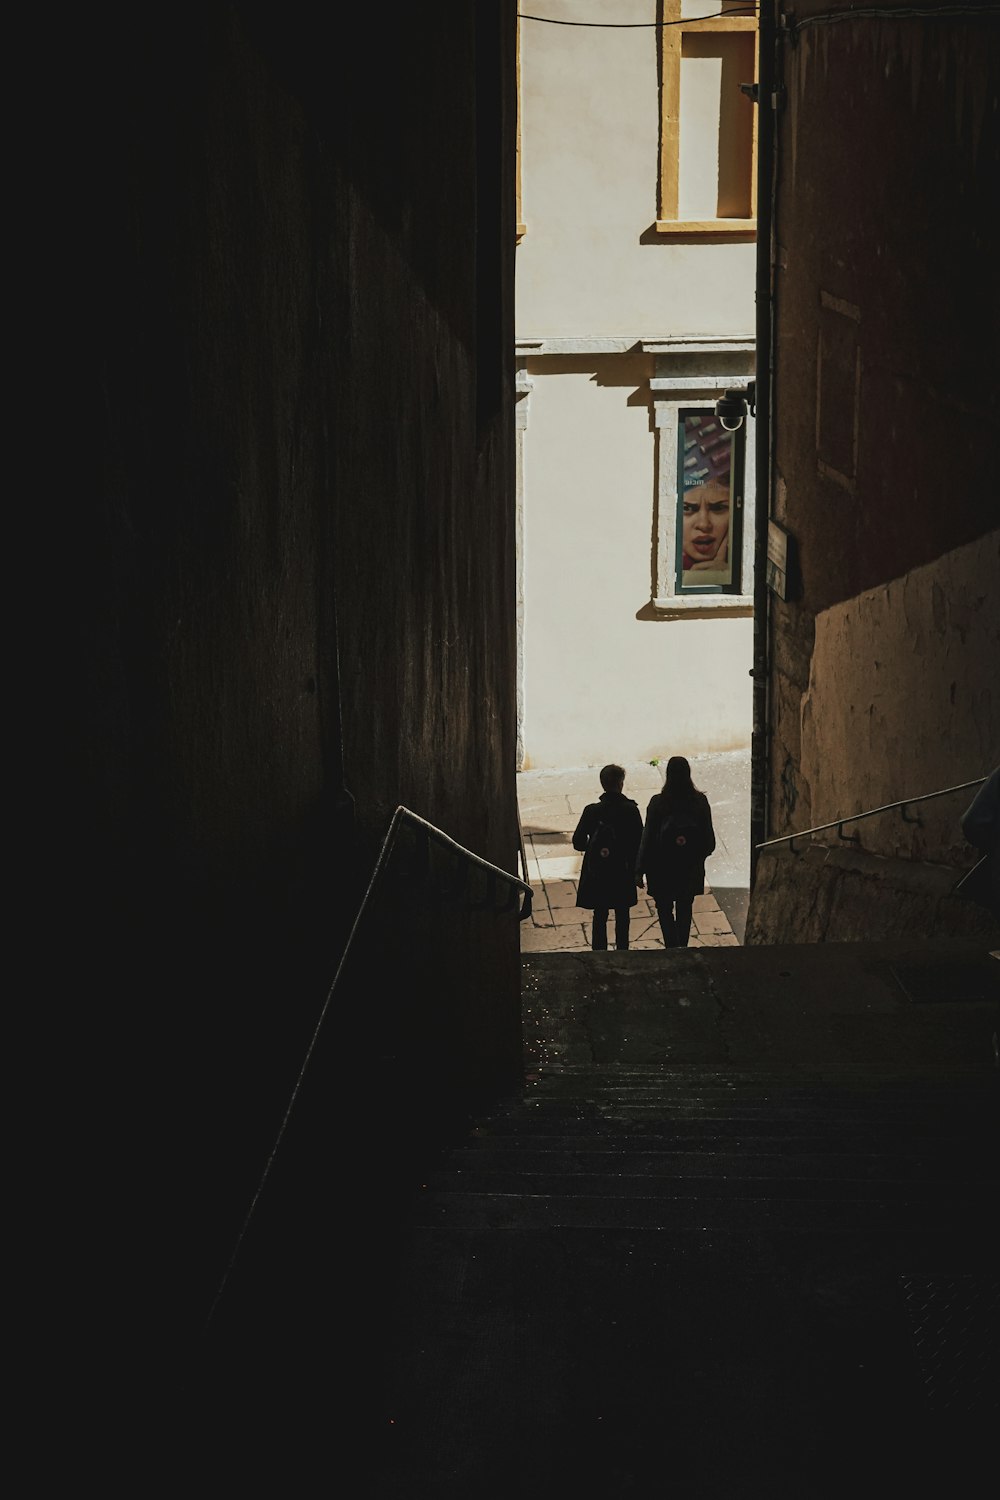 two people walking down a dark alley way